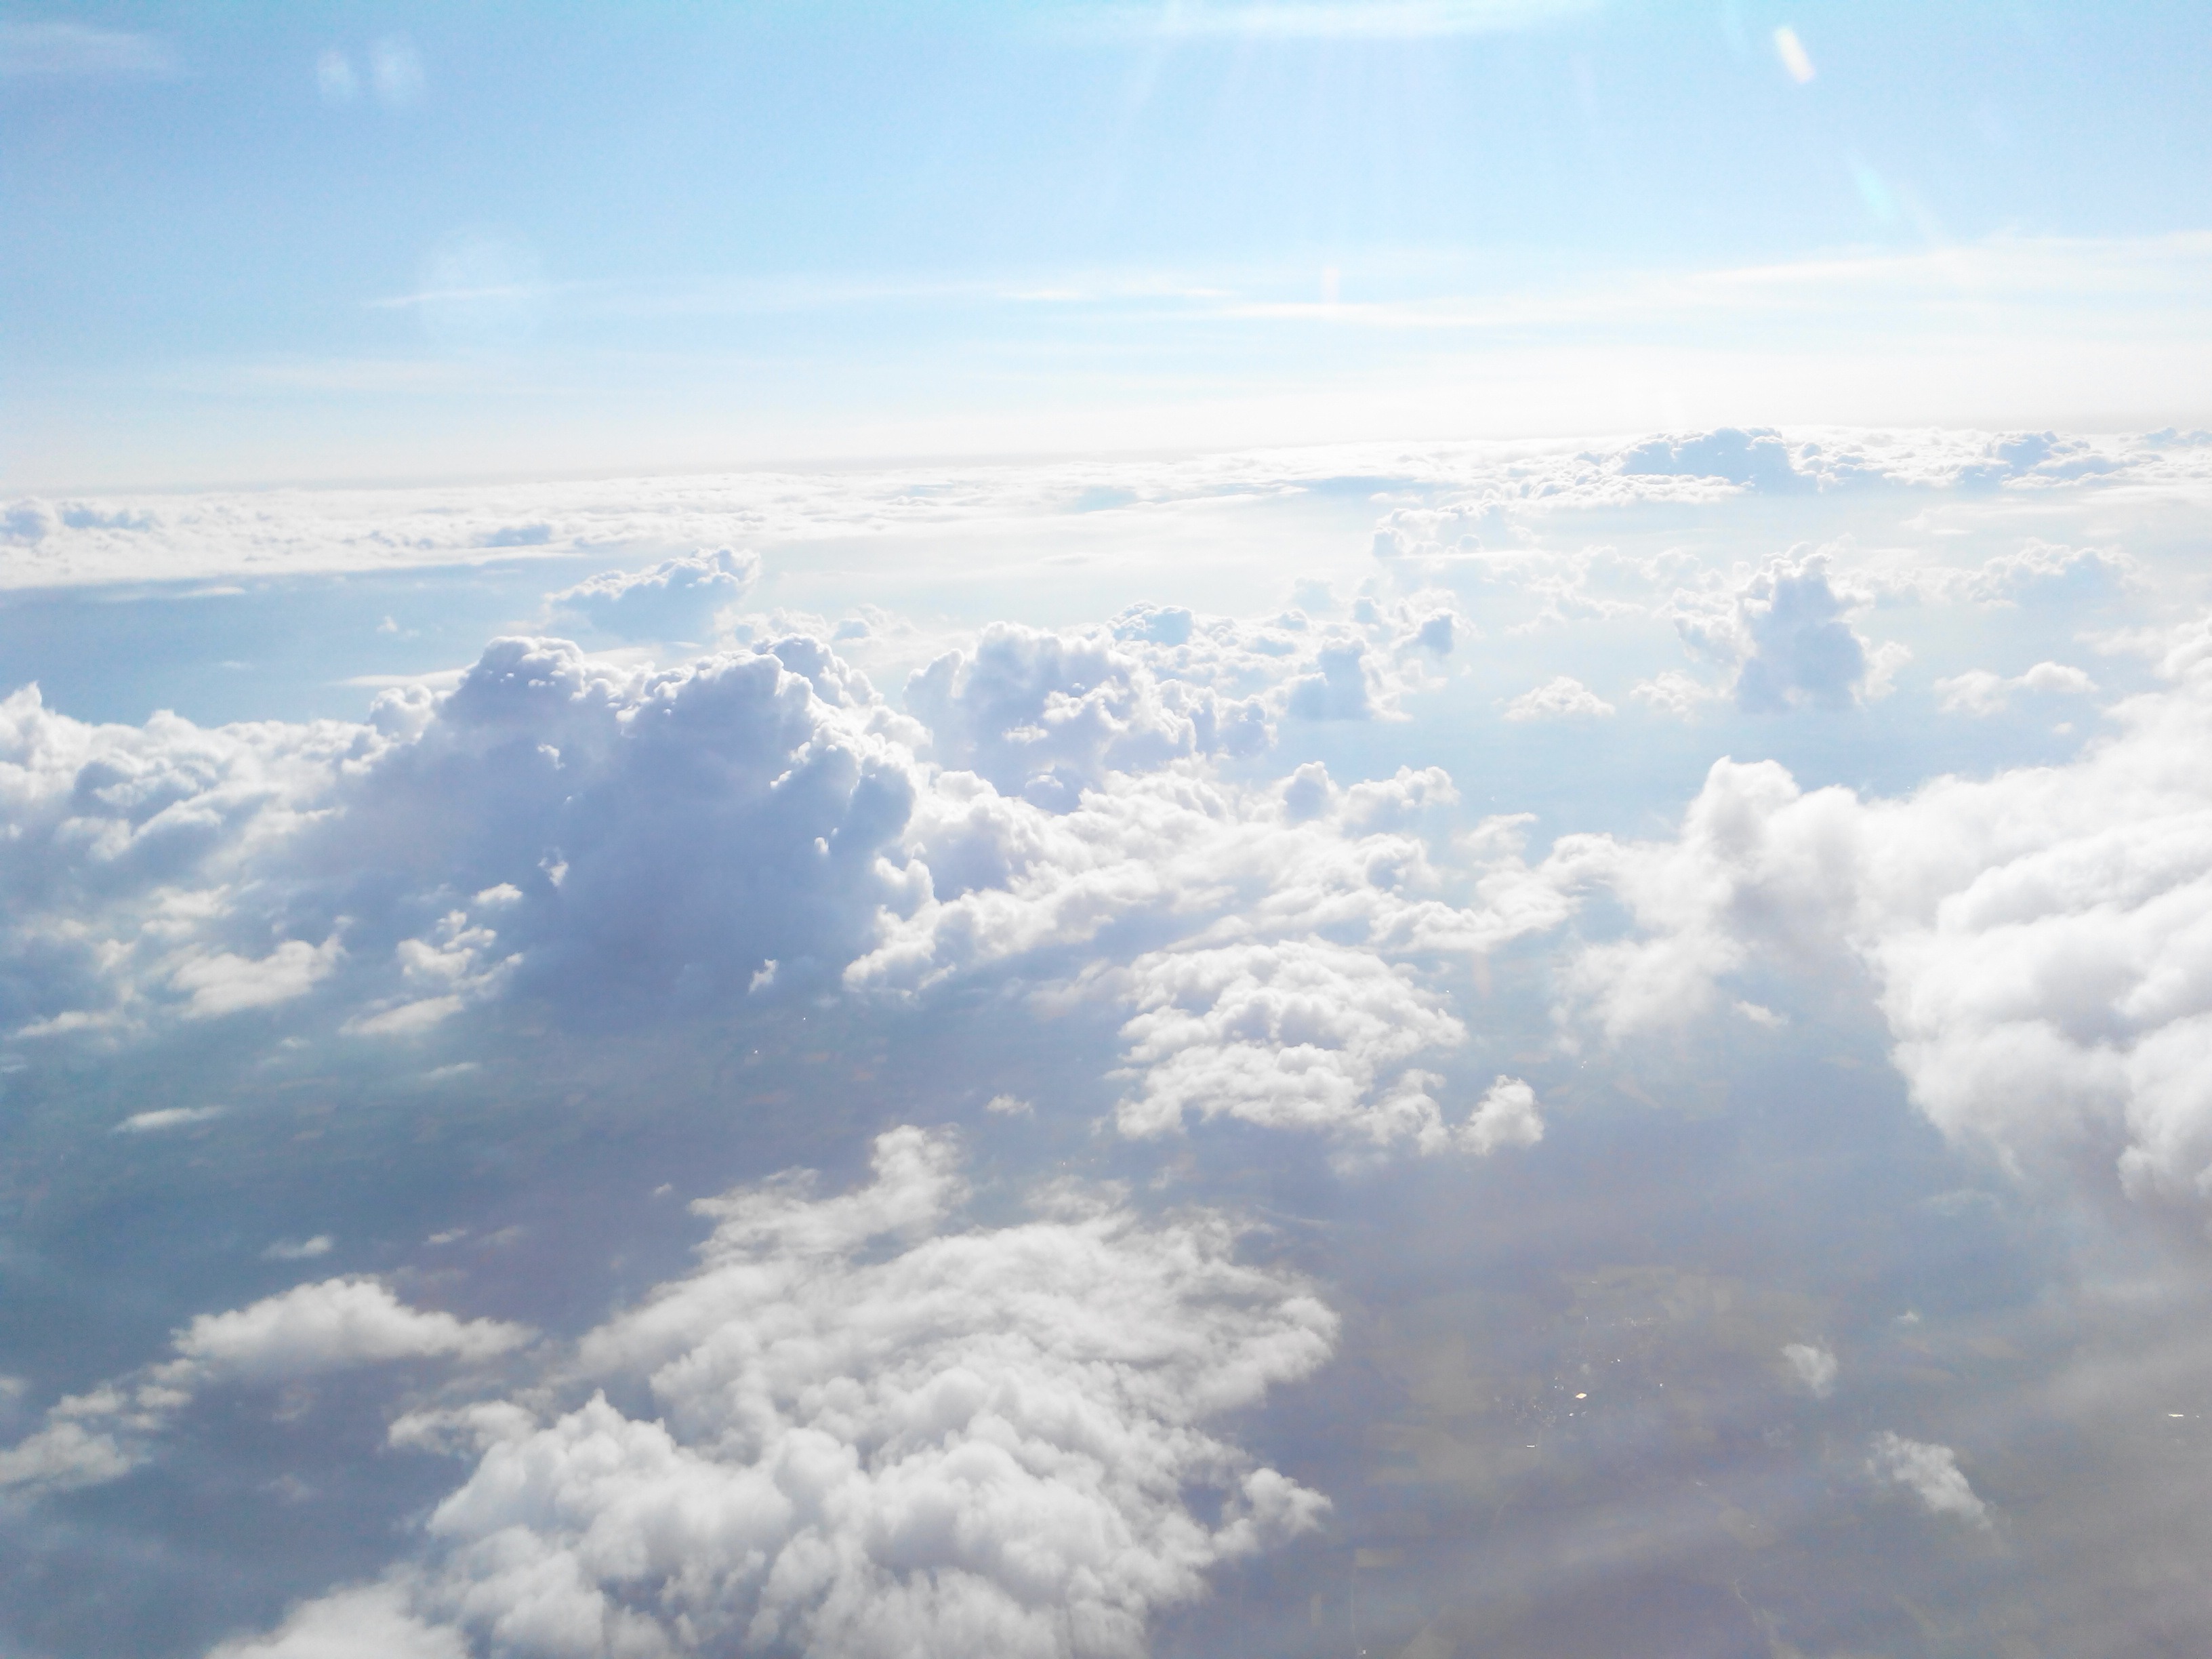 Фото над облаками пейзажи облако - бесплатные картинки на Fonwall